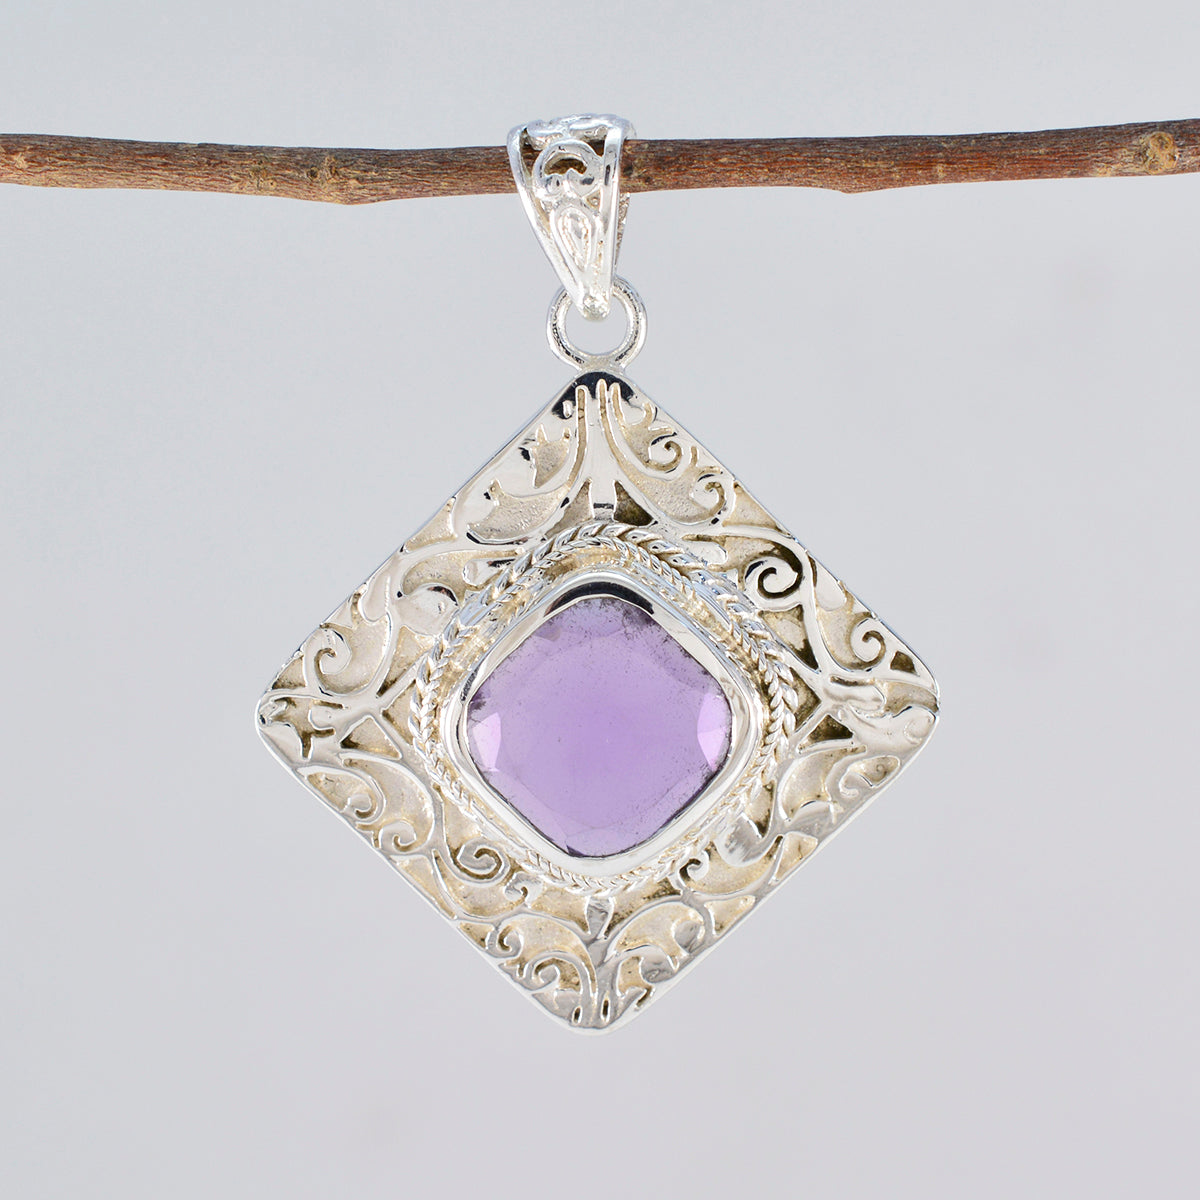 Riyo Nice Gemstone Cushion Faceted Purple Amethyst 997 Sterling Silver Pendant Gift For Birthday